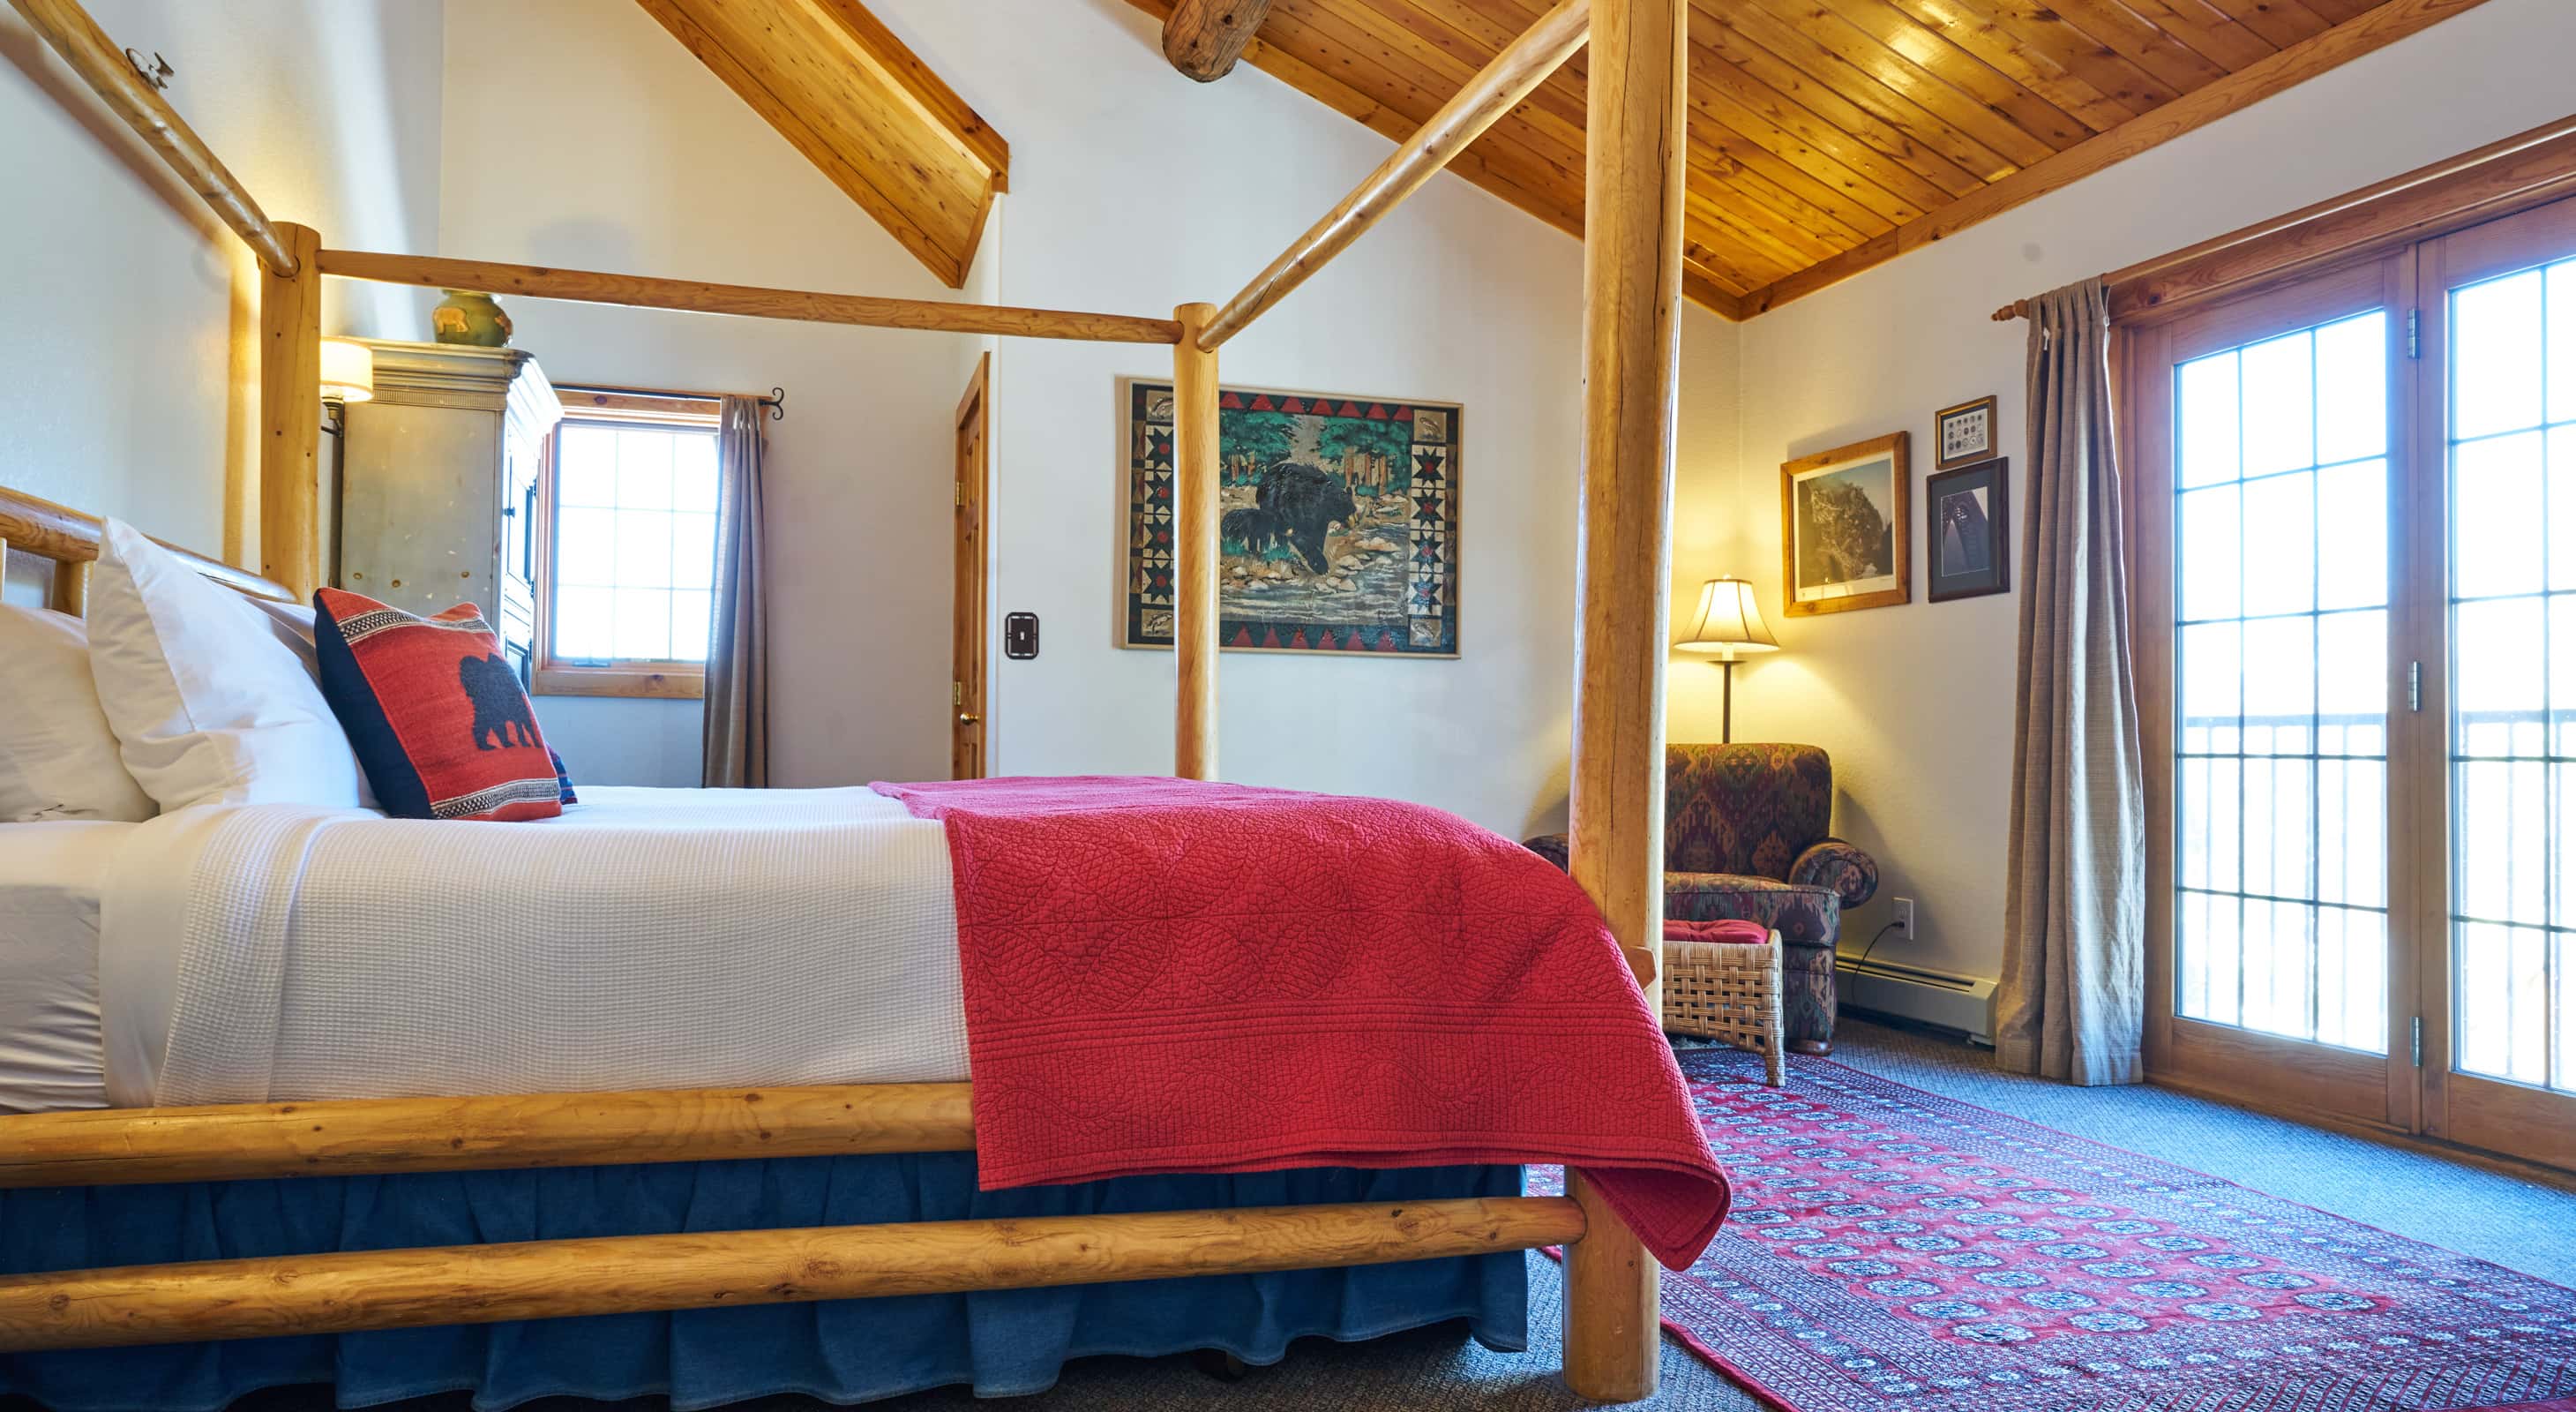 King bed at our romantic Colorado getaway